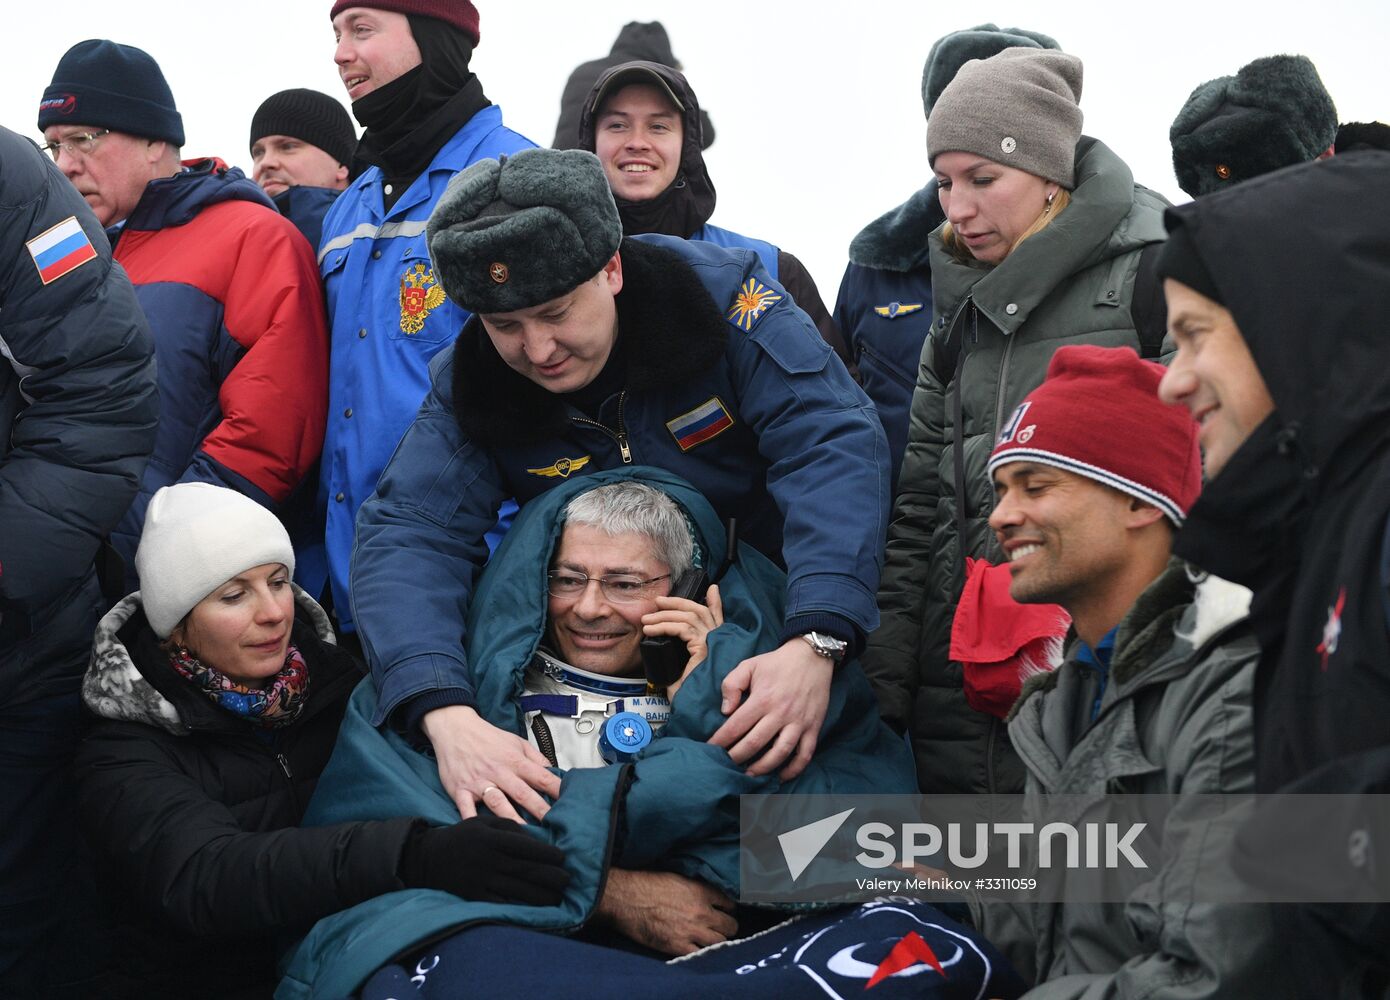 Soyuz MS-06 manned capsule lands in Kazakhstan